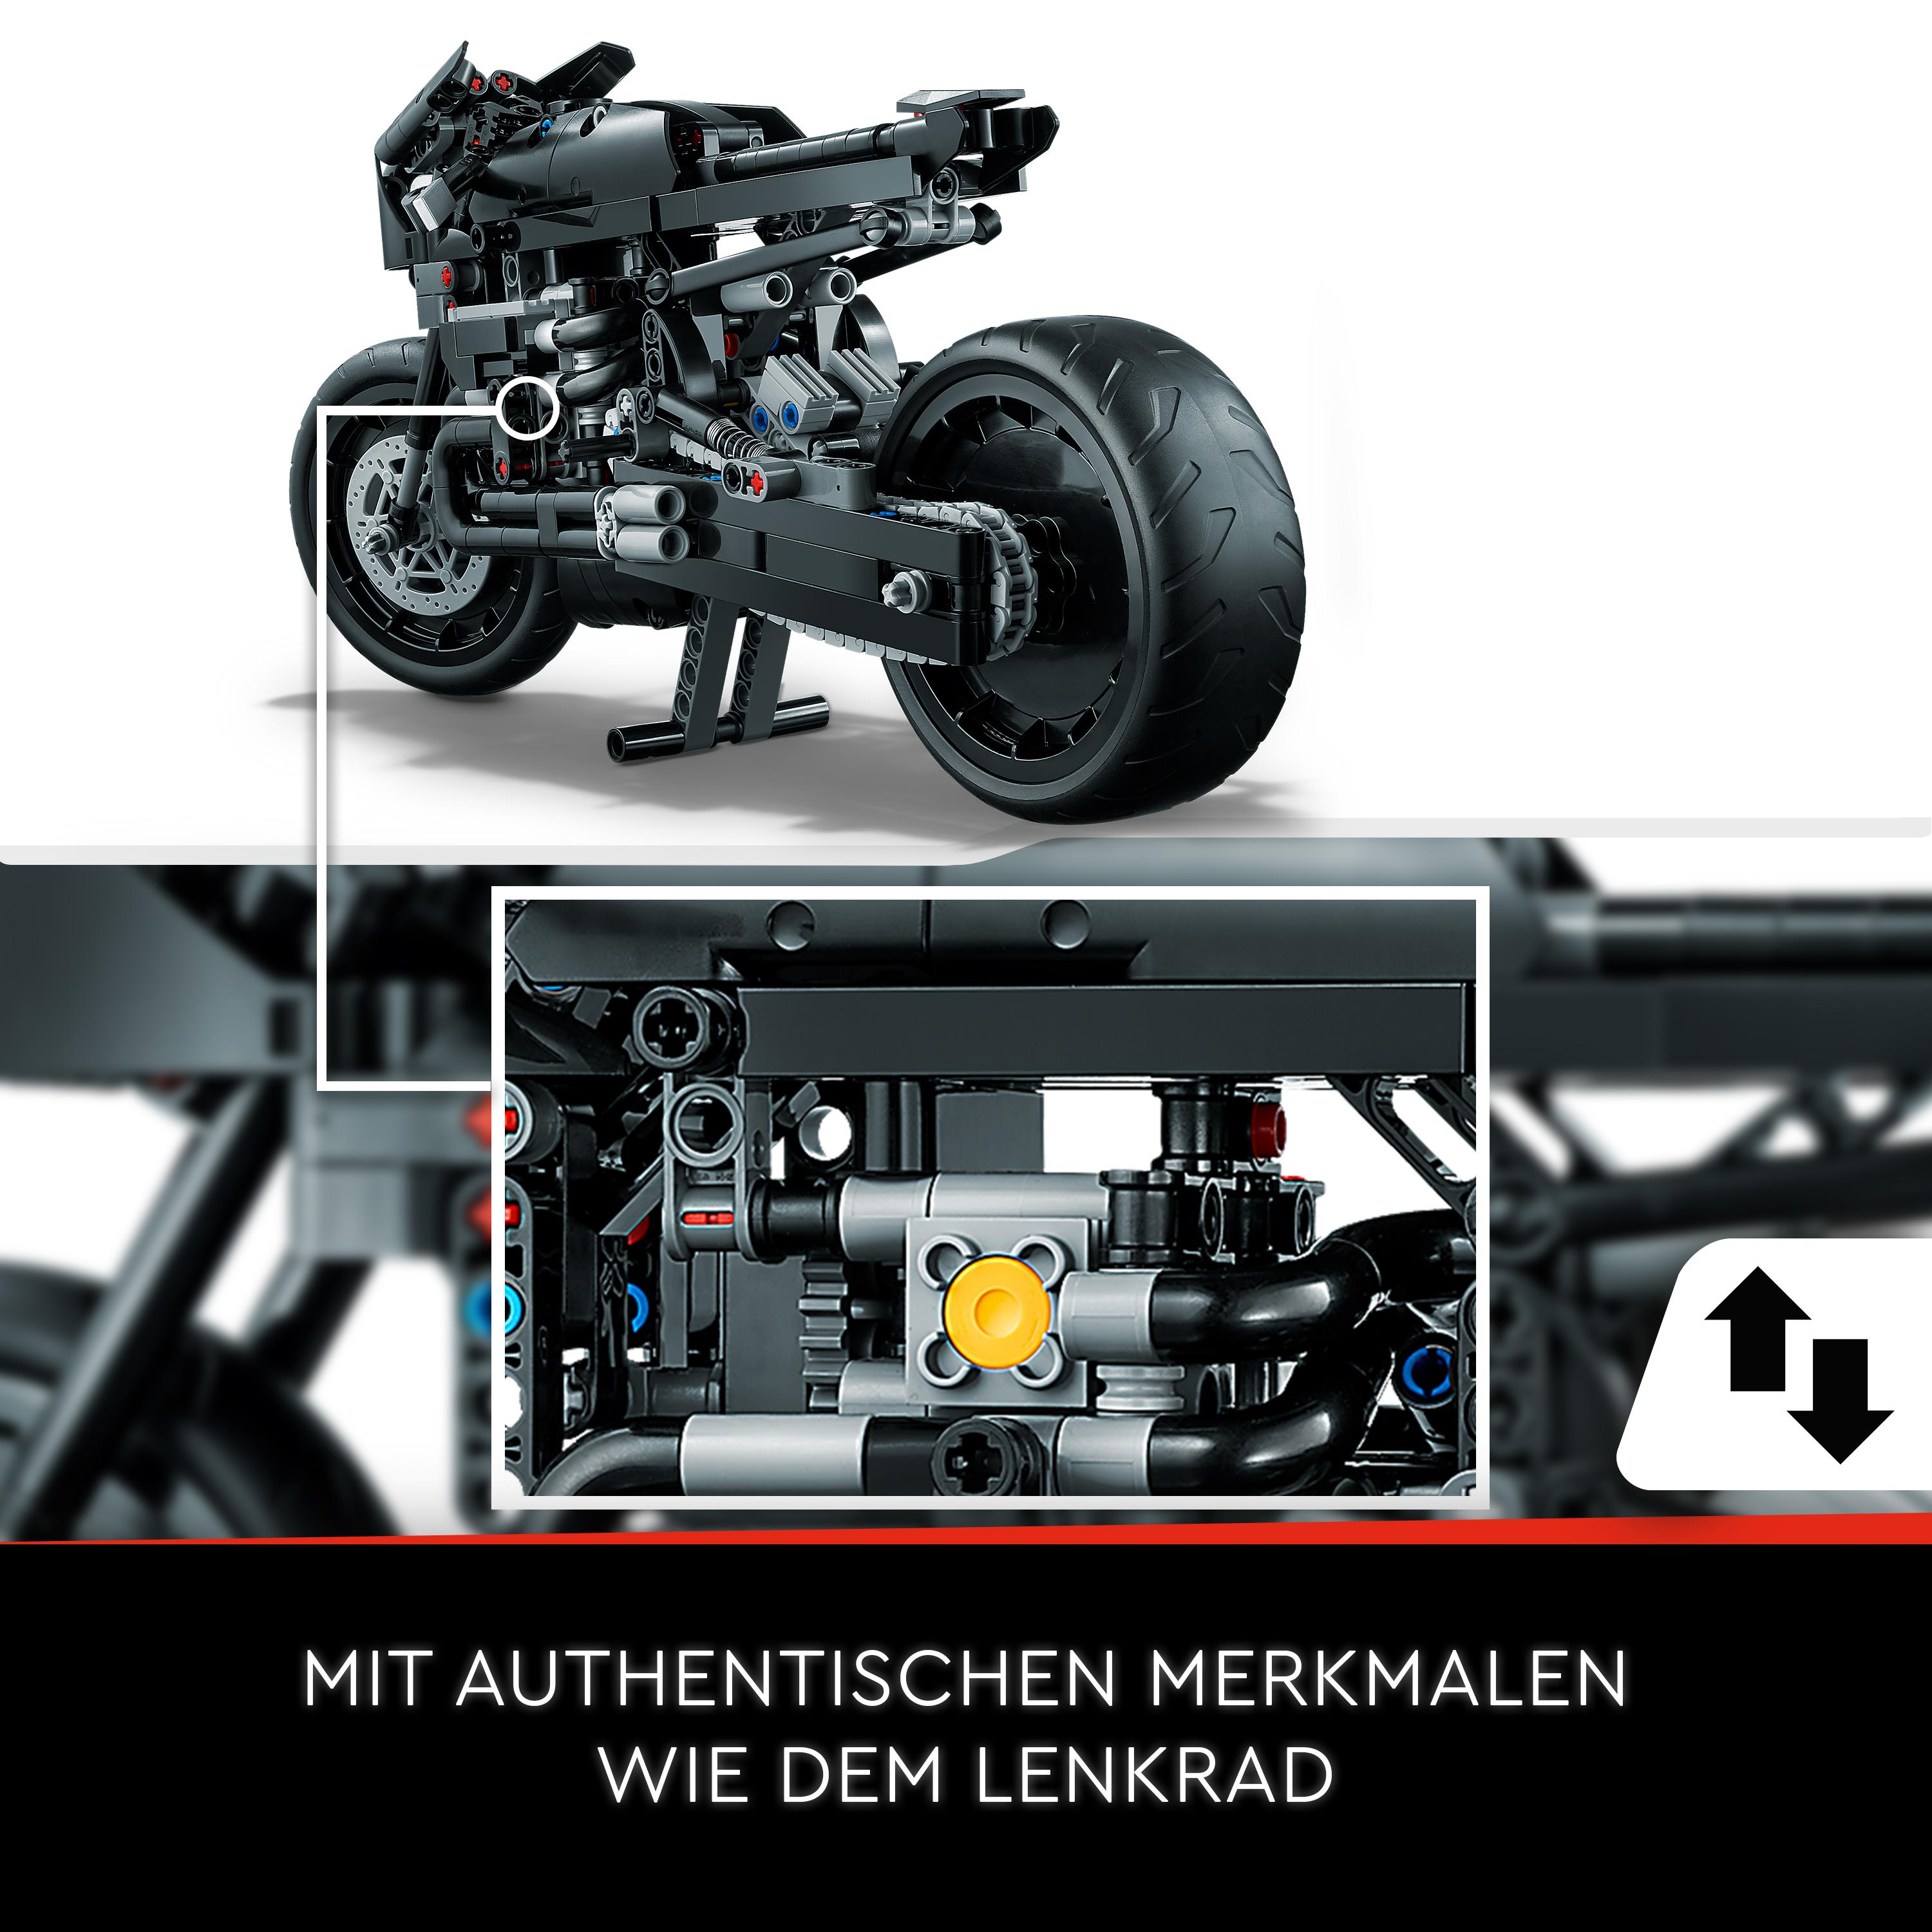 LEGO Technic 42155 THE BATMAN Bausatz, BATCYCLE – Mehrfarbig